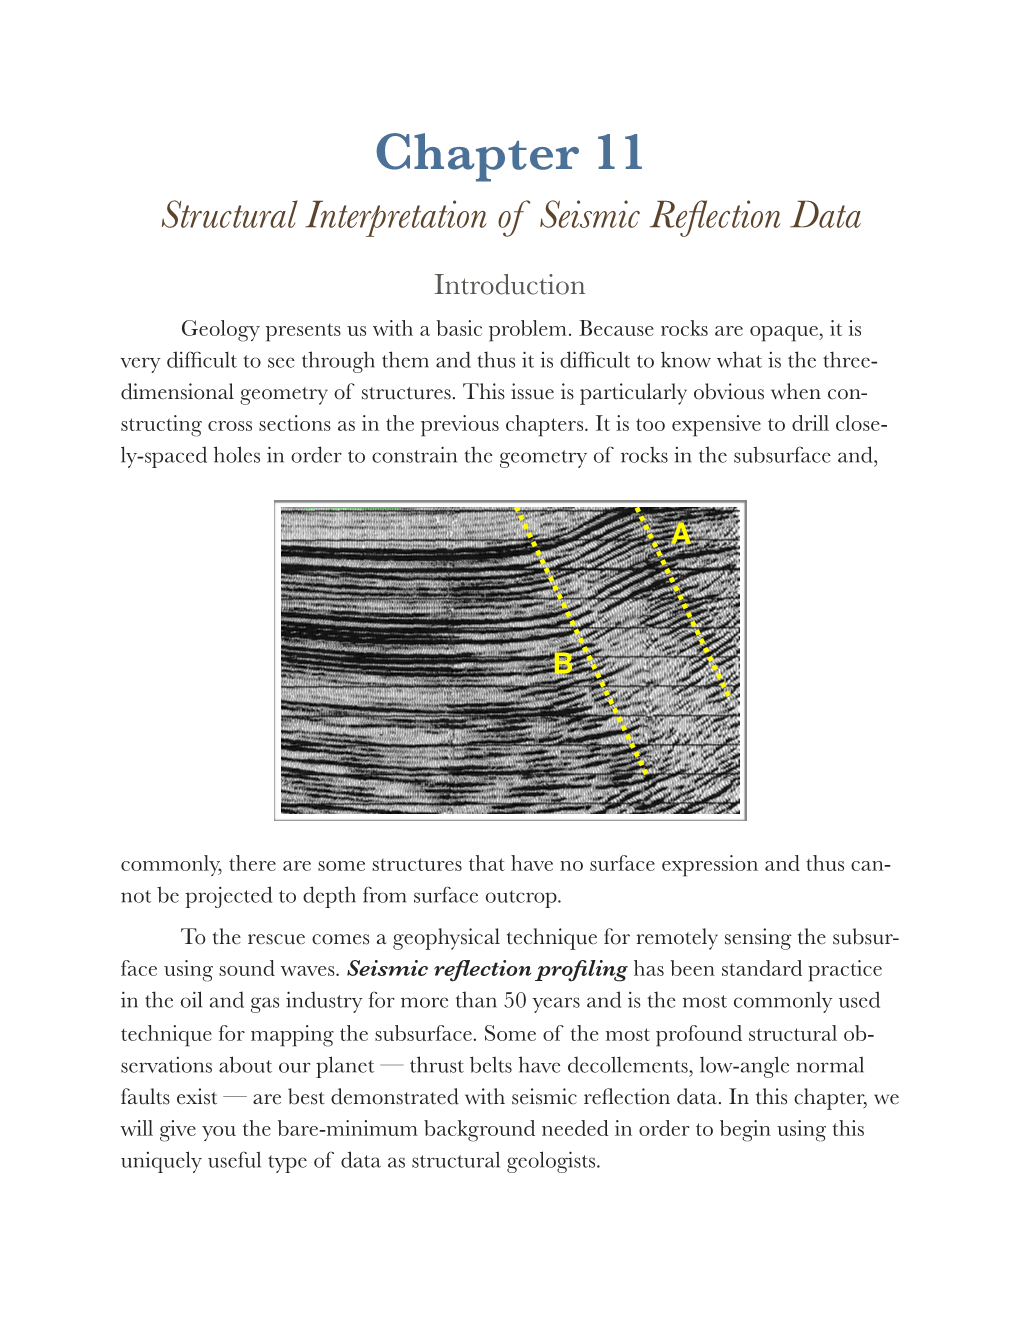 Chapter 11 Structural Interpretation of Seismic Reflection Data